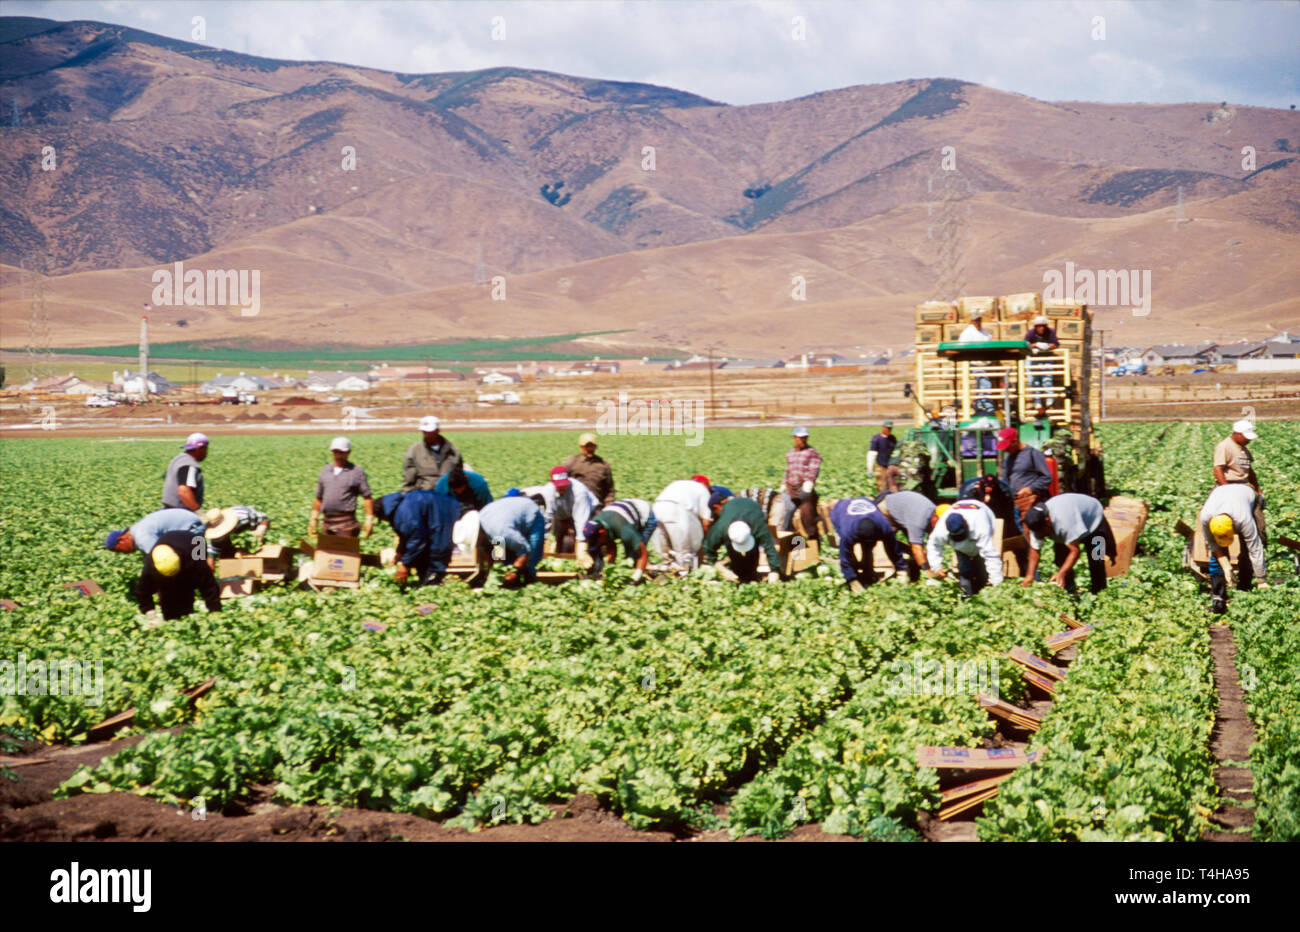 Monterey California, County Salinas Valley Region genannt Salad Bowl of America Farmarbeiter, Mitarbeiter, arbeiten, arbeiten, Server Mitarbeiter Mitarbeiter Arbeitnehmer wo Stockfoto